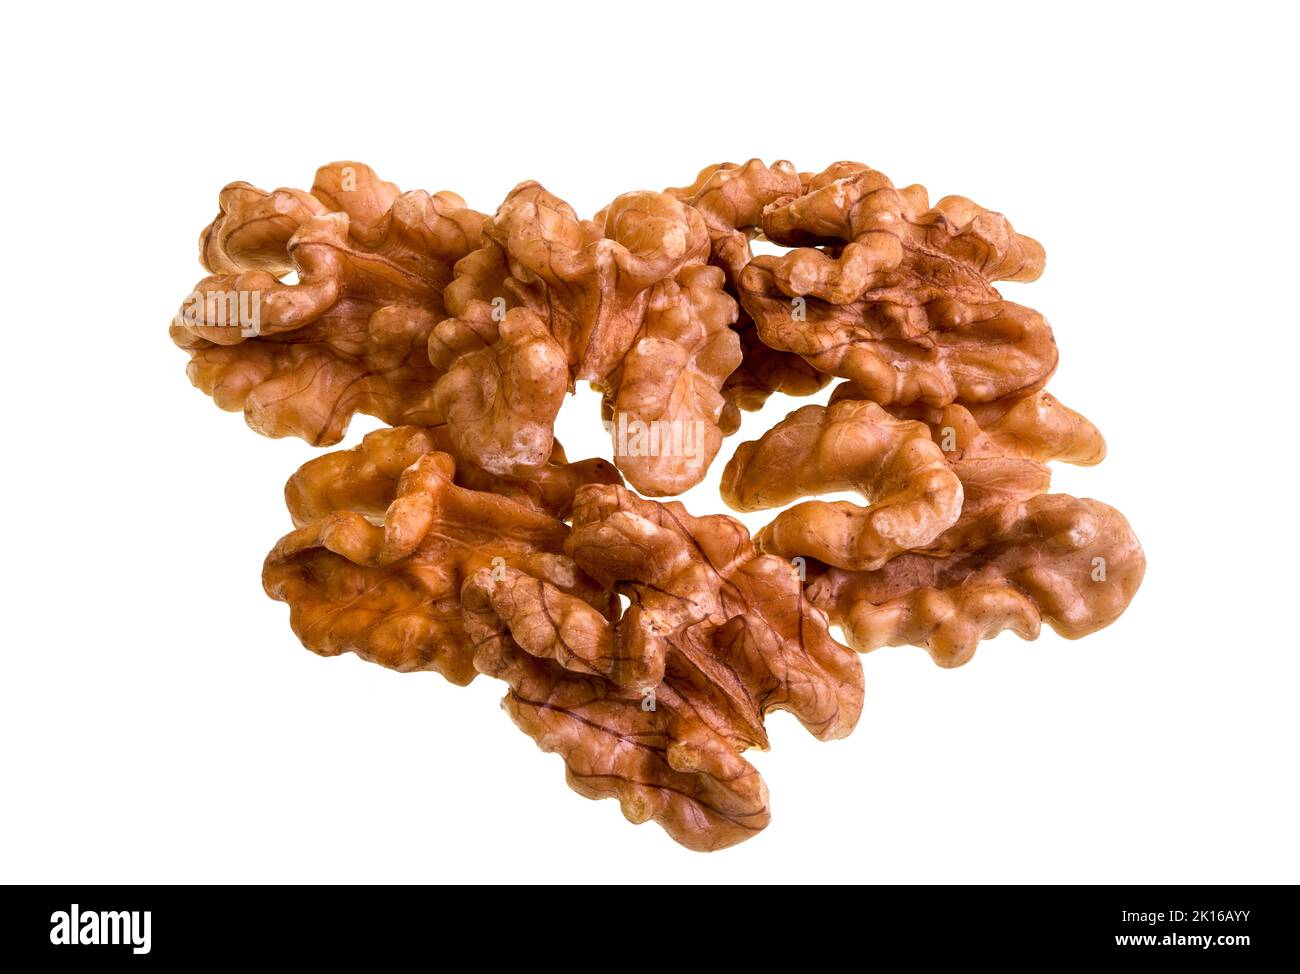 Walnut is the edible seed of the walnut tree, Juglans regia. Stock Photo